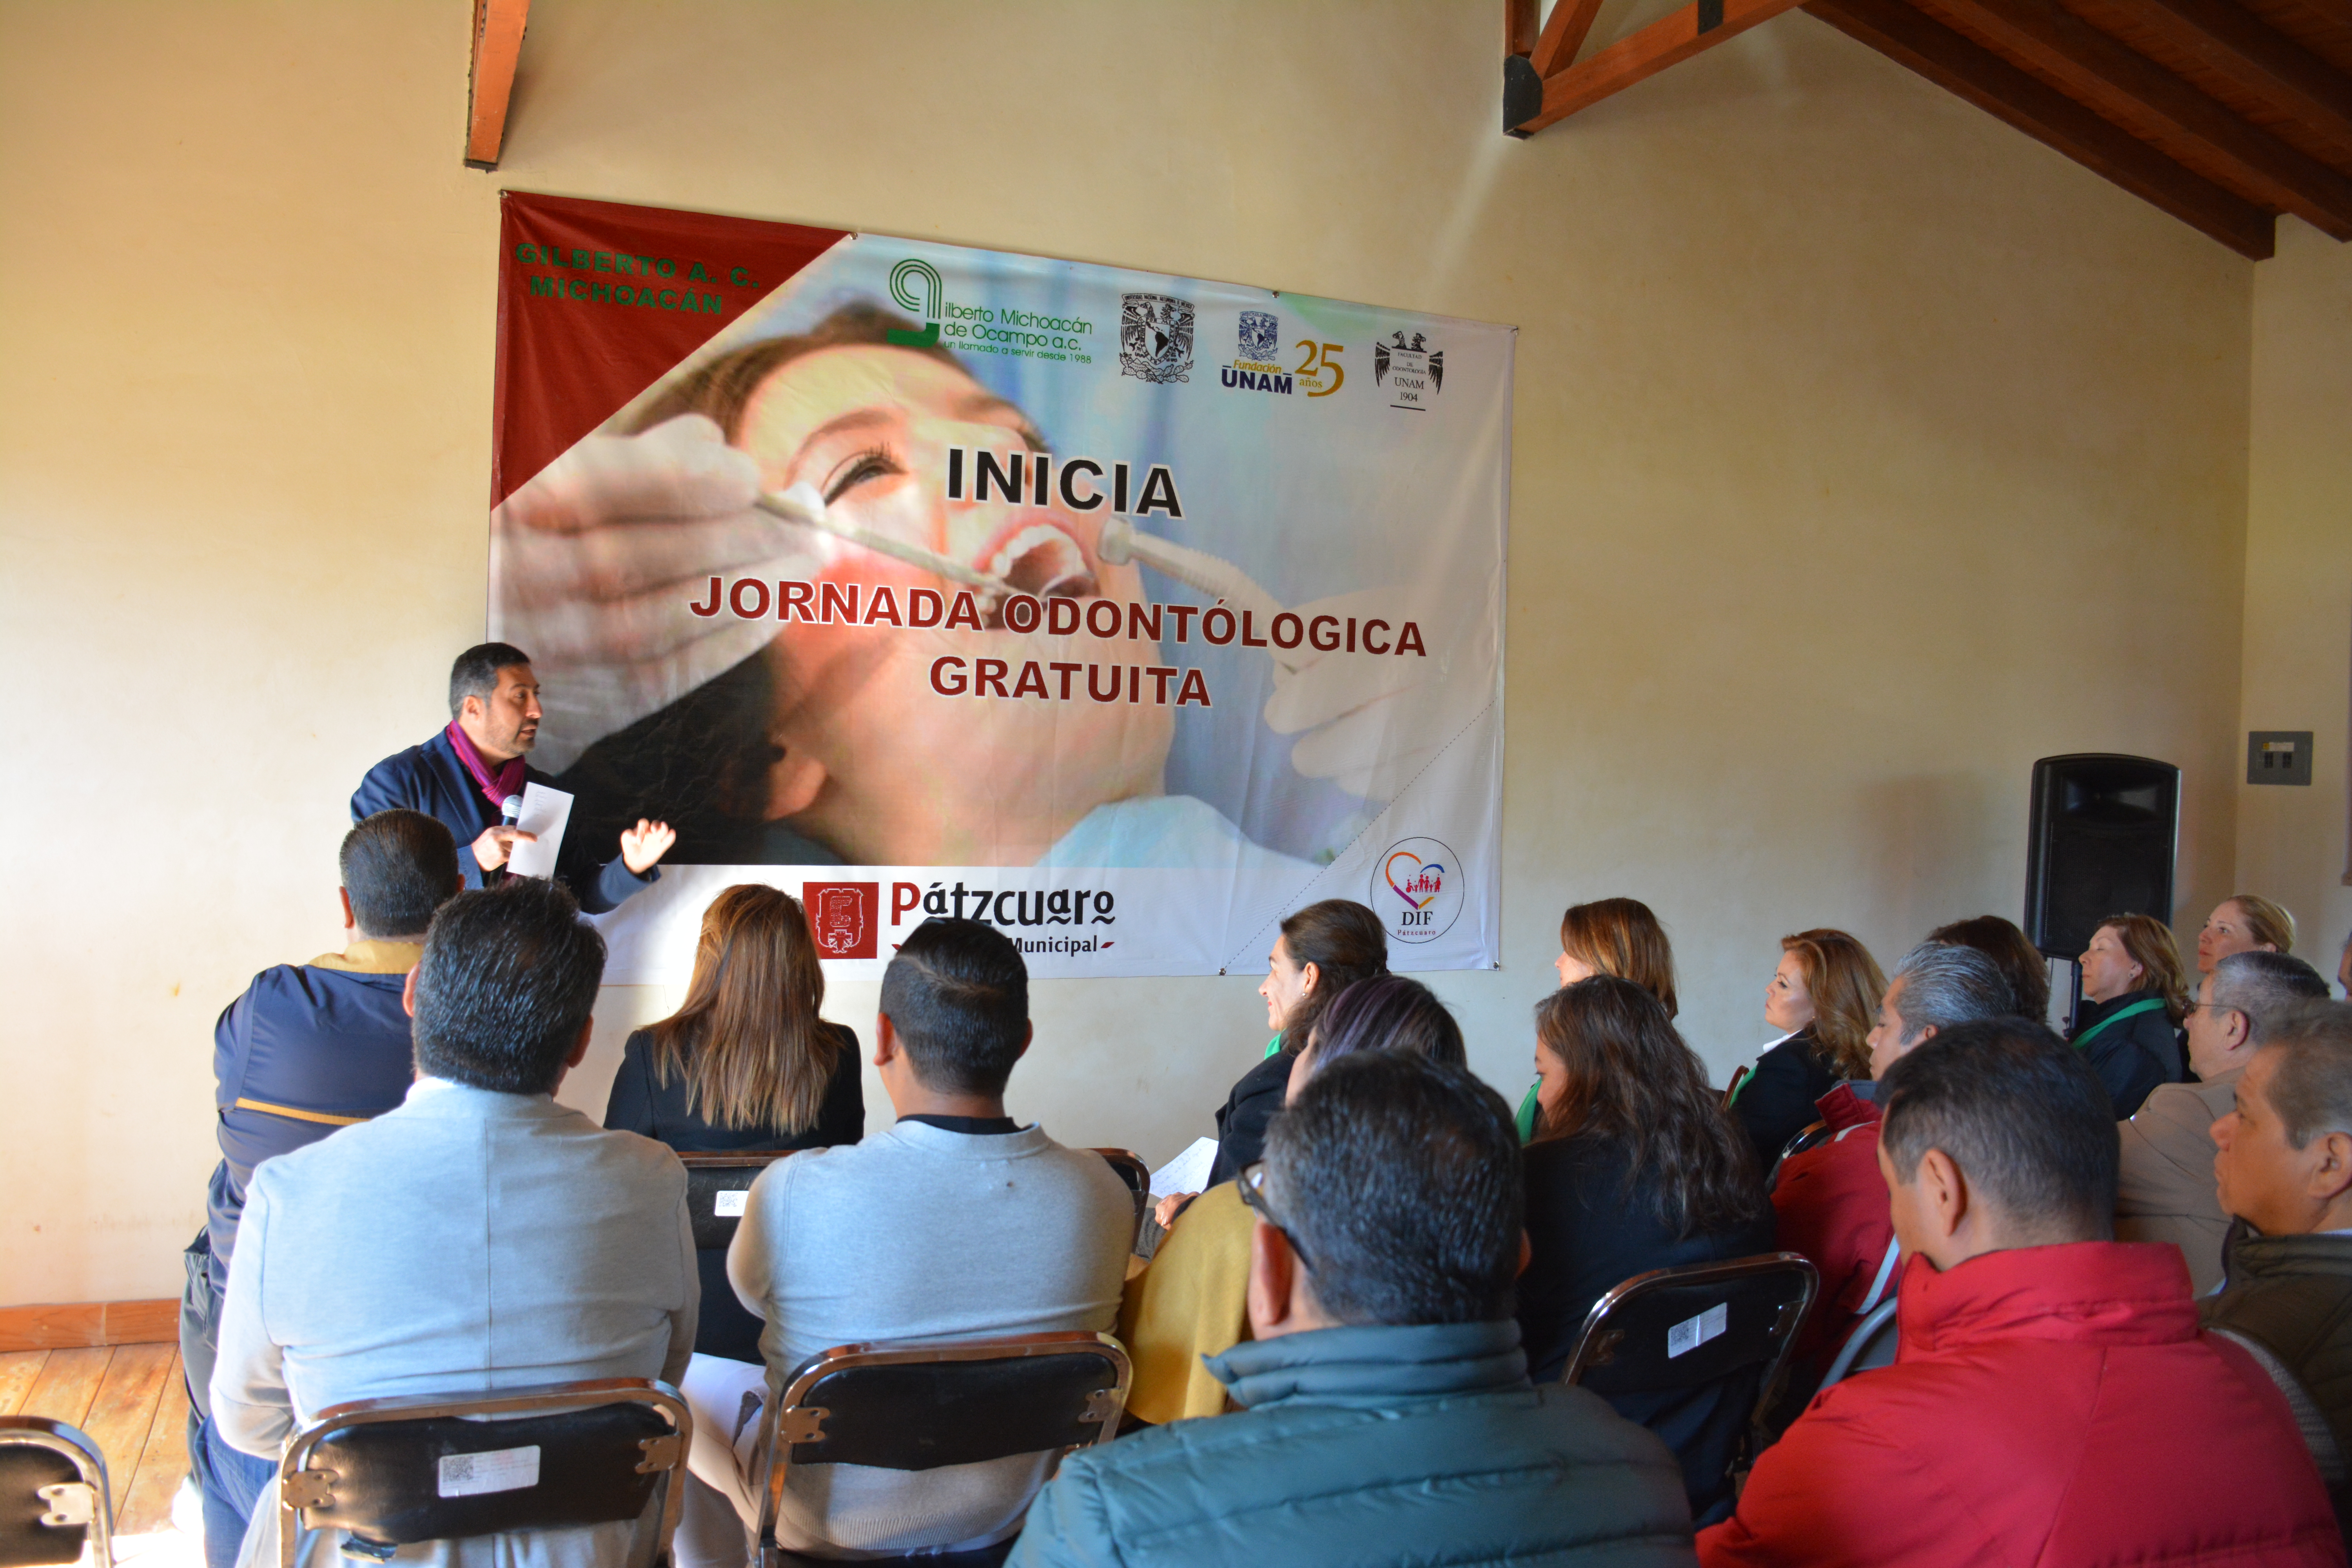 Inicia jornada odontológica gratuita en Pátzcuaro